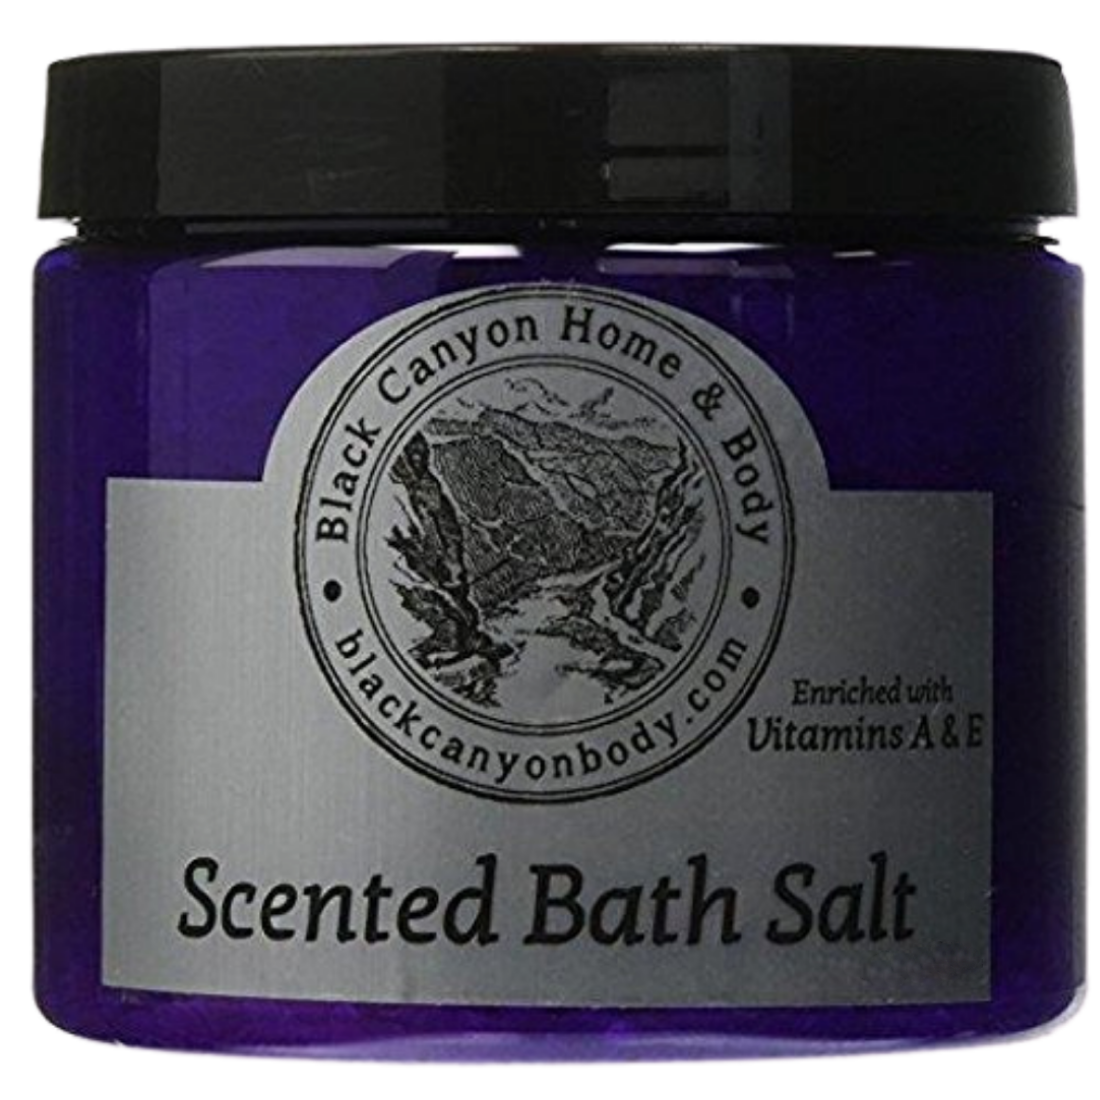 Black Canyon Black Currant & Sandalwood Scented Sea Salt Bath Soak